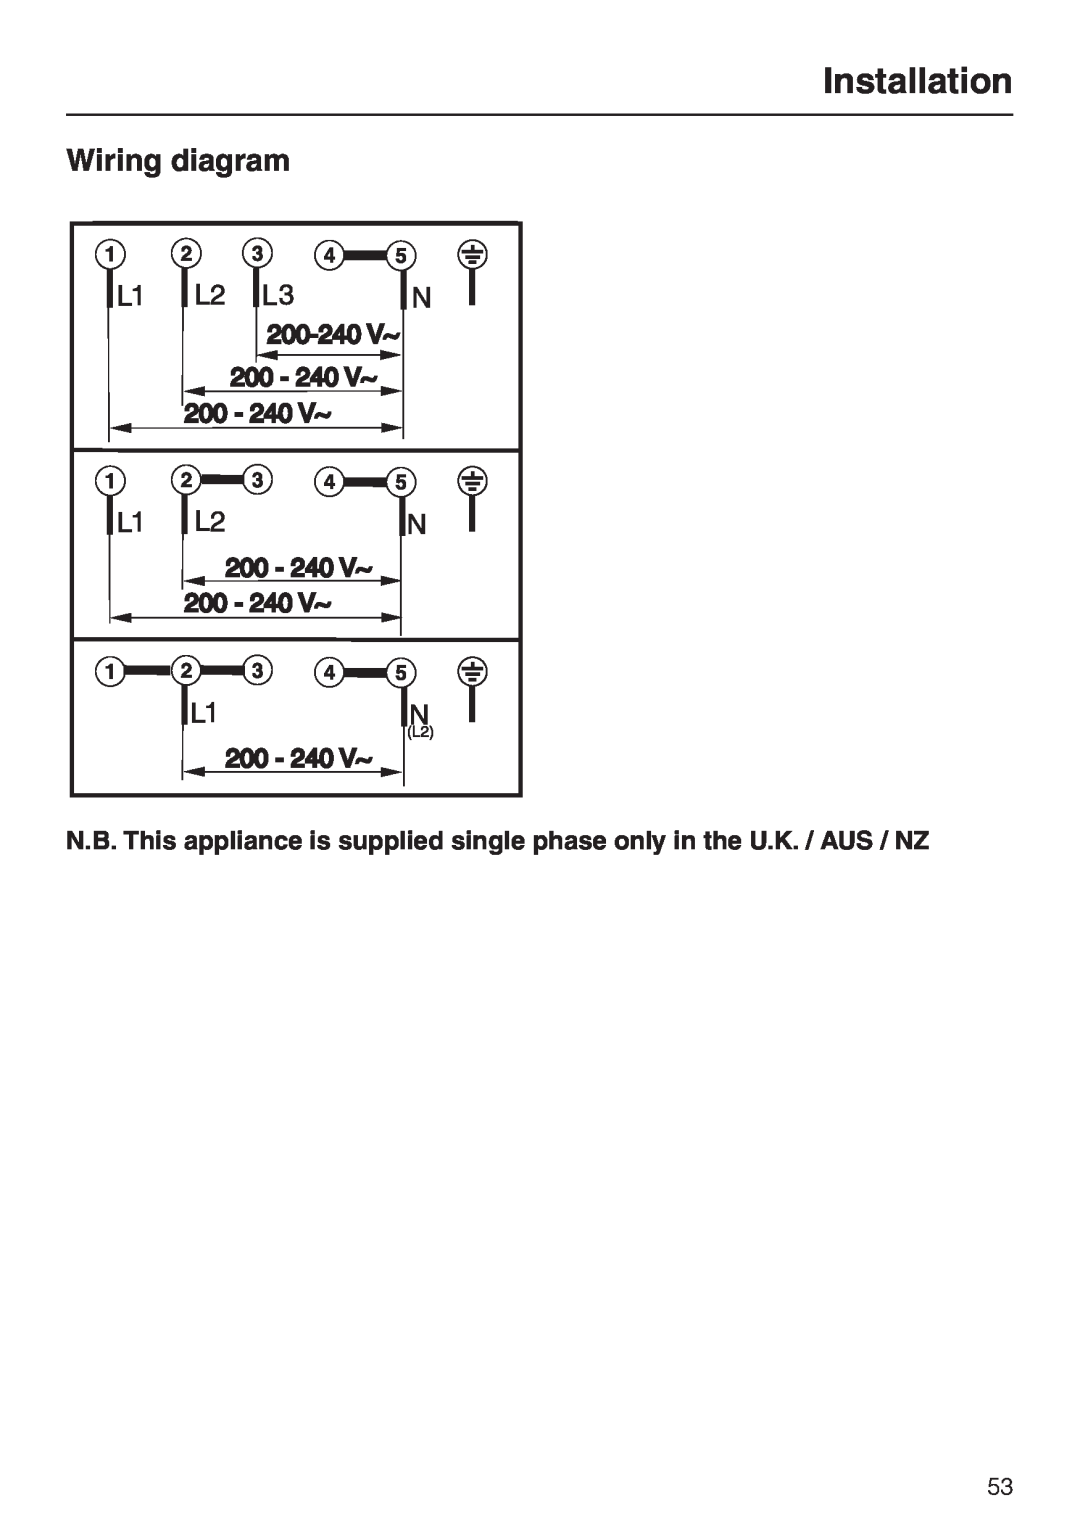 Miele KM5773 installation instructions Wiring diagram, Installation 